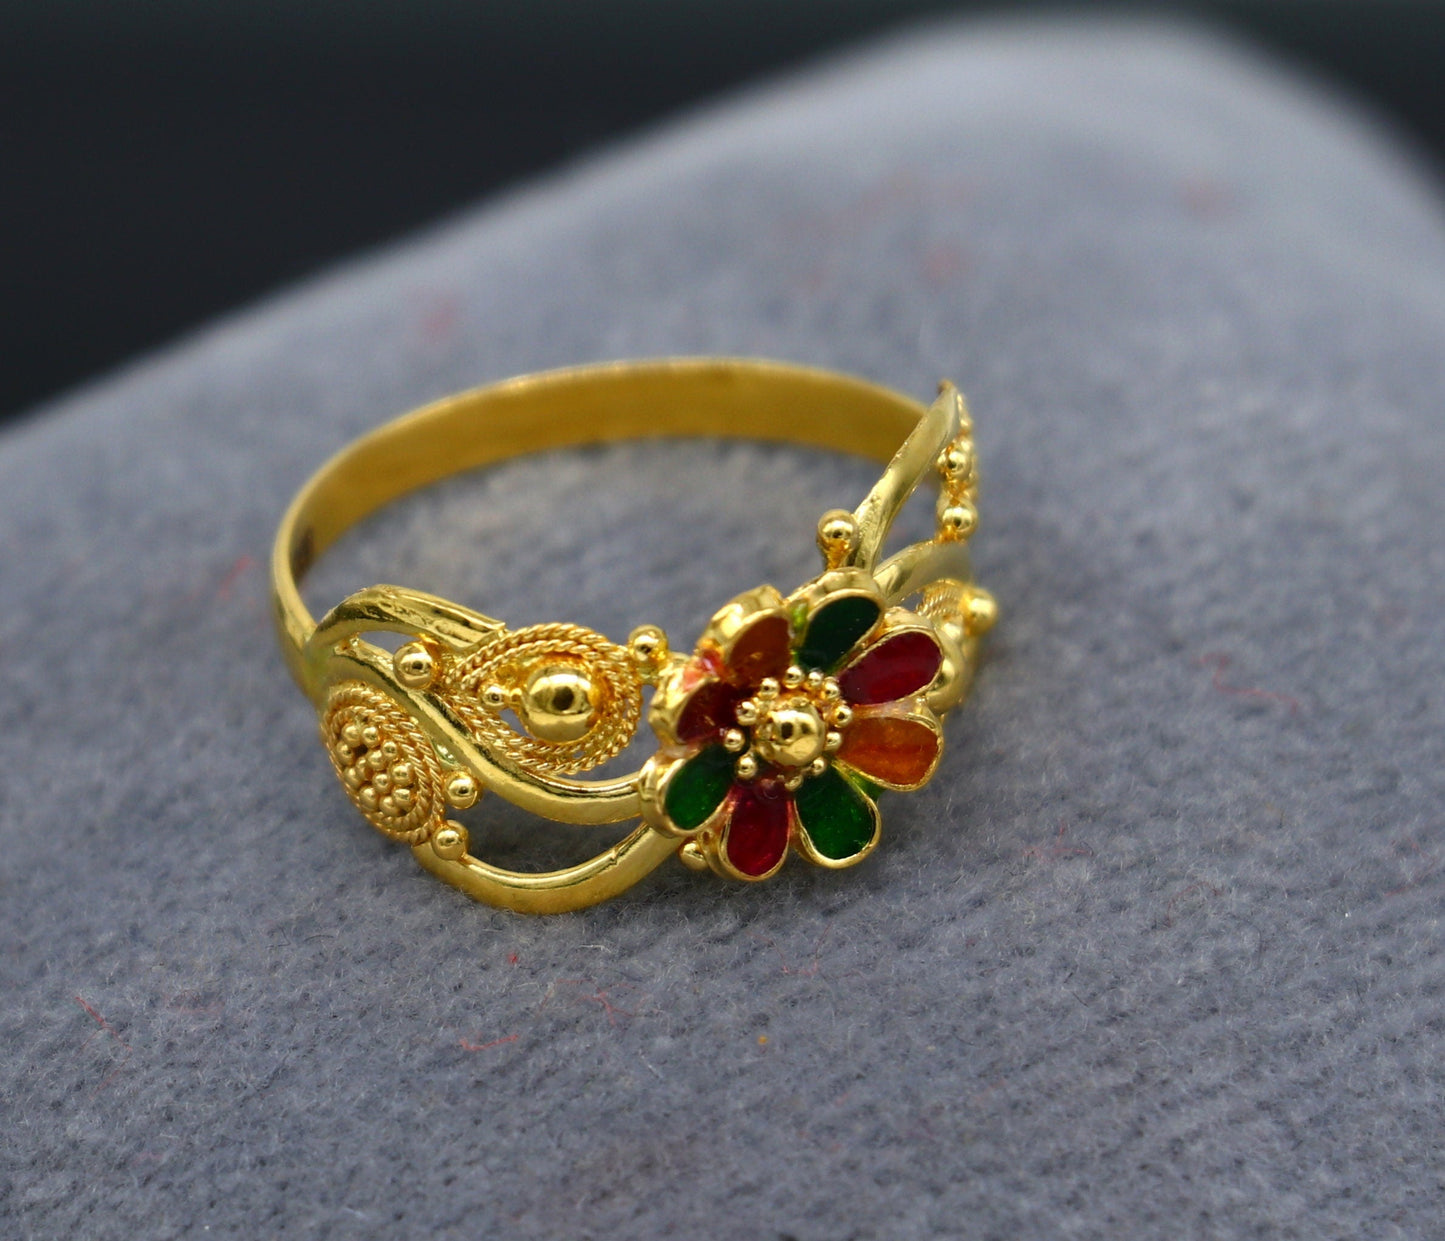 22kt karat yellow gold handmade flower design ring fabulous filigree work band unisex ring from Rajasthan India ring37 - TRIBAL ORNAMENTS